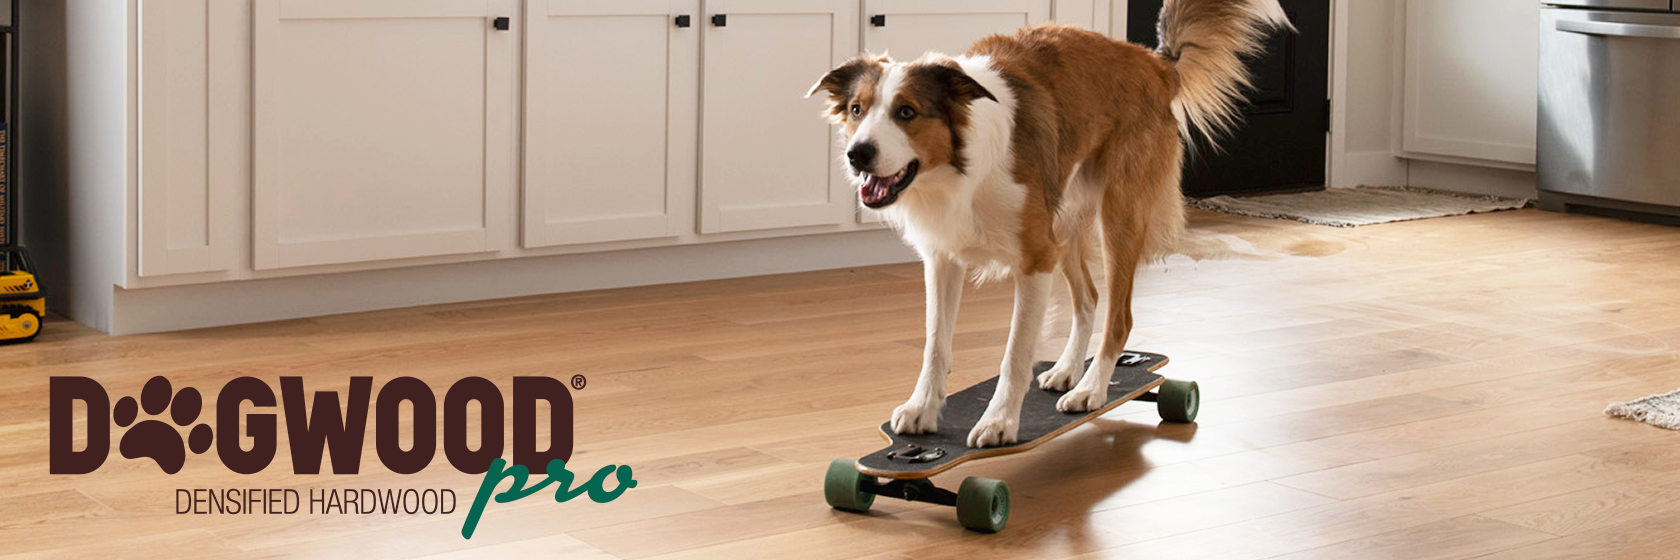 dog on skateboard on floor